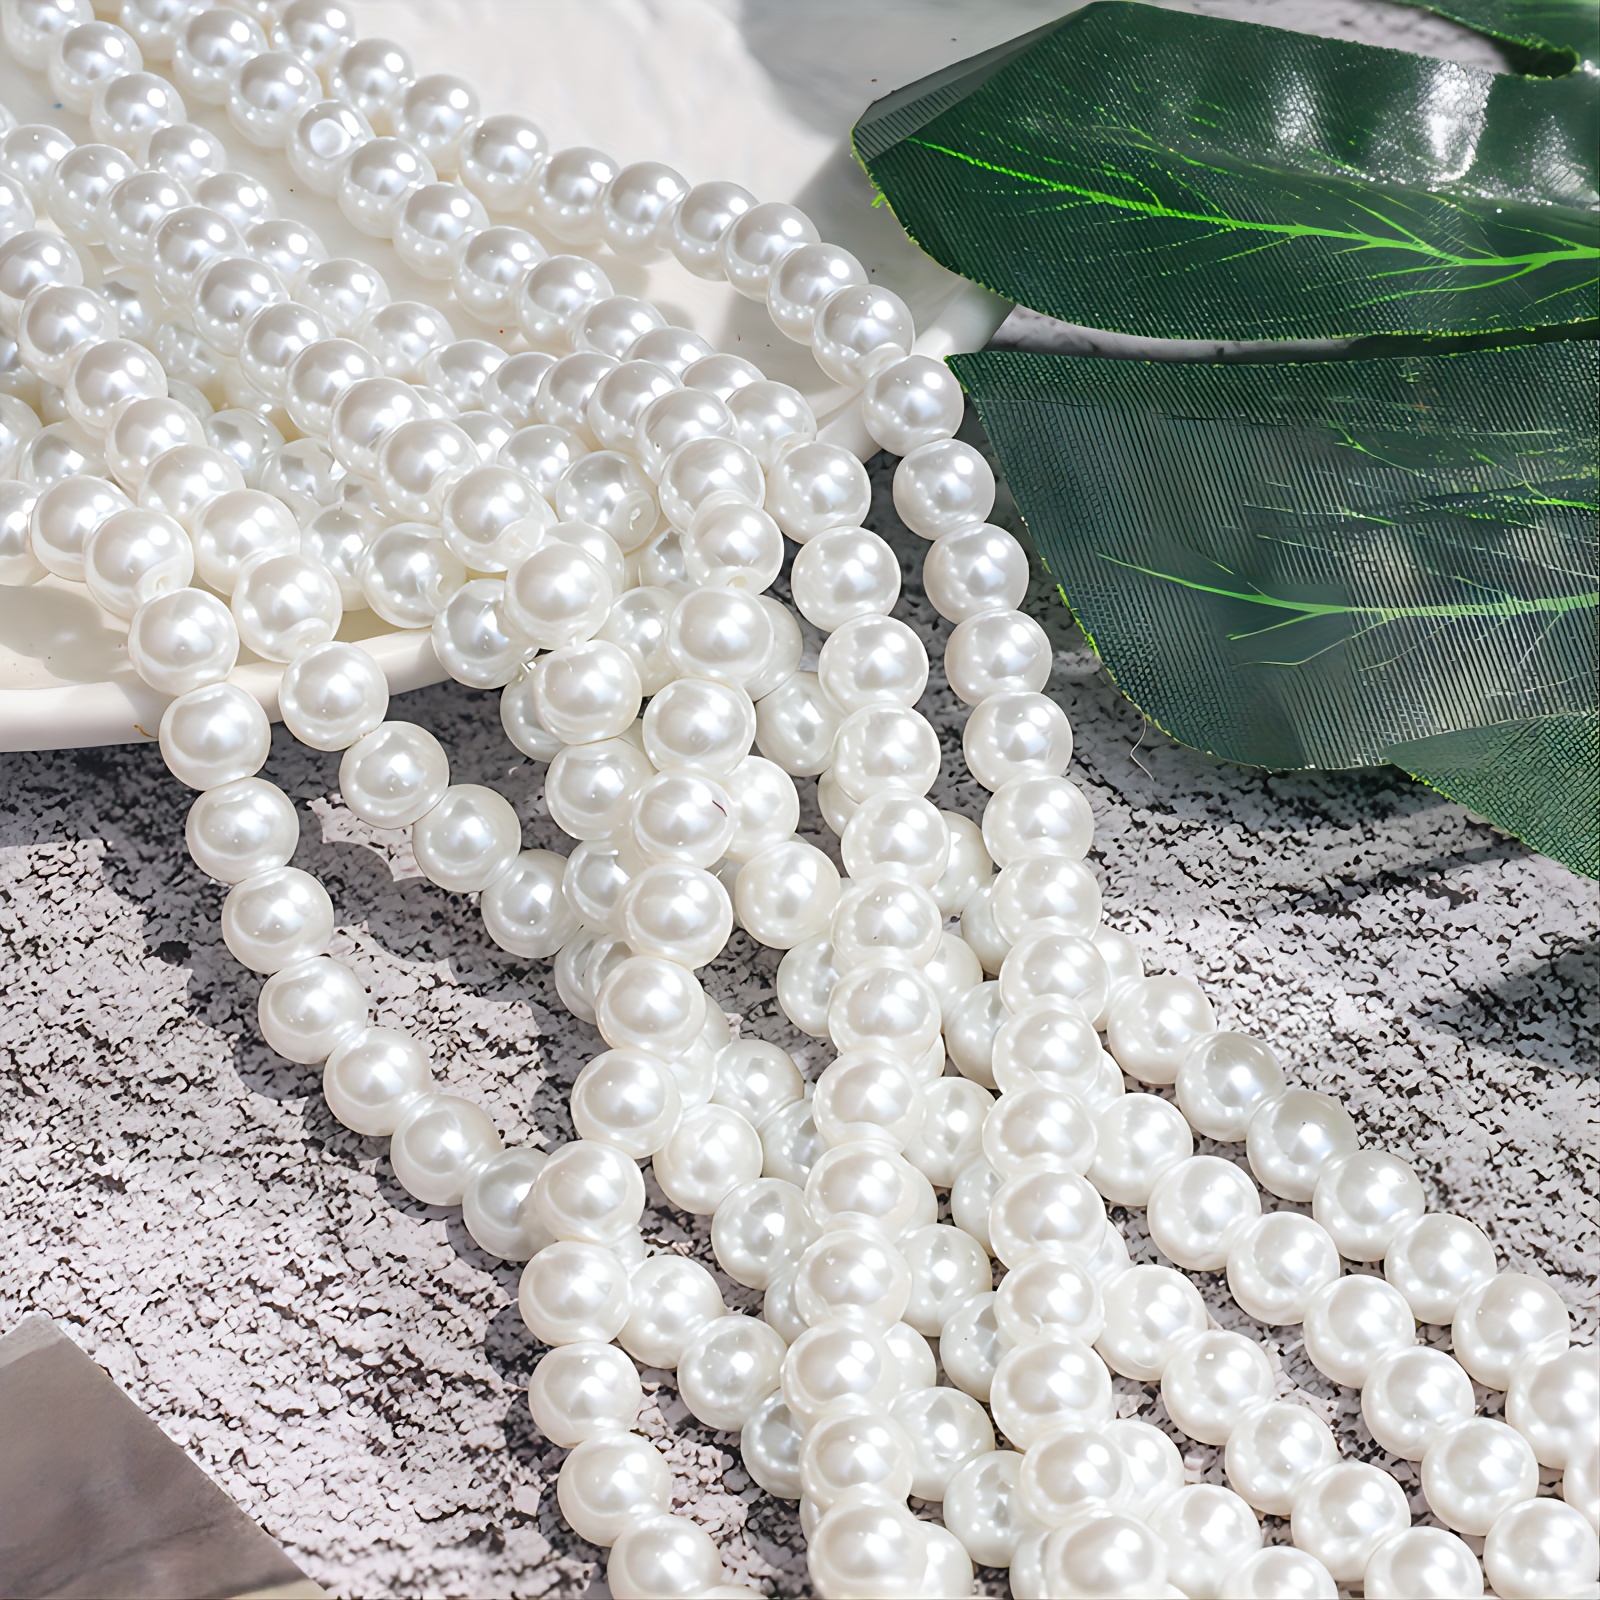 Wholesale 4/6/8/10mm Glass Beads Imitation Pearls Beads Round